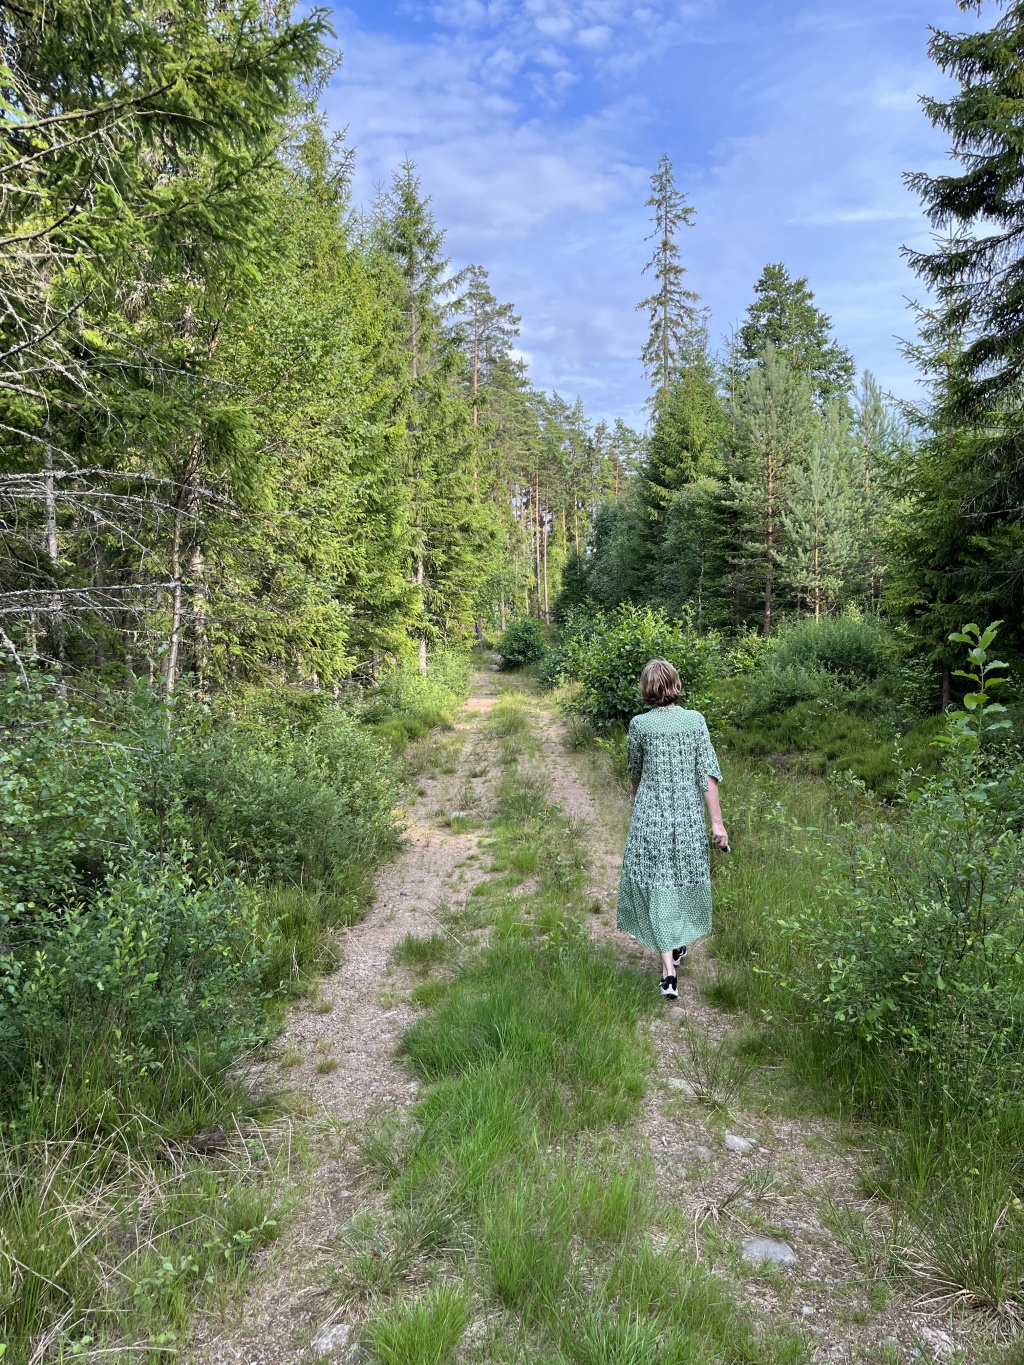 Our Swedish summer adventure